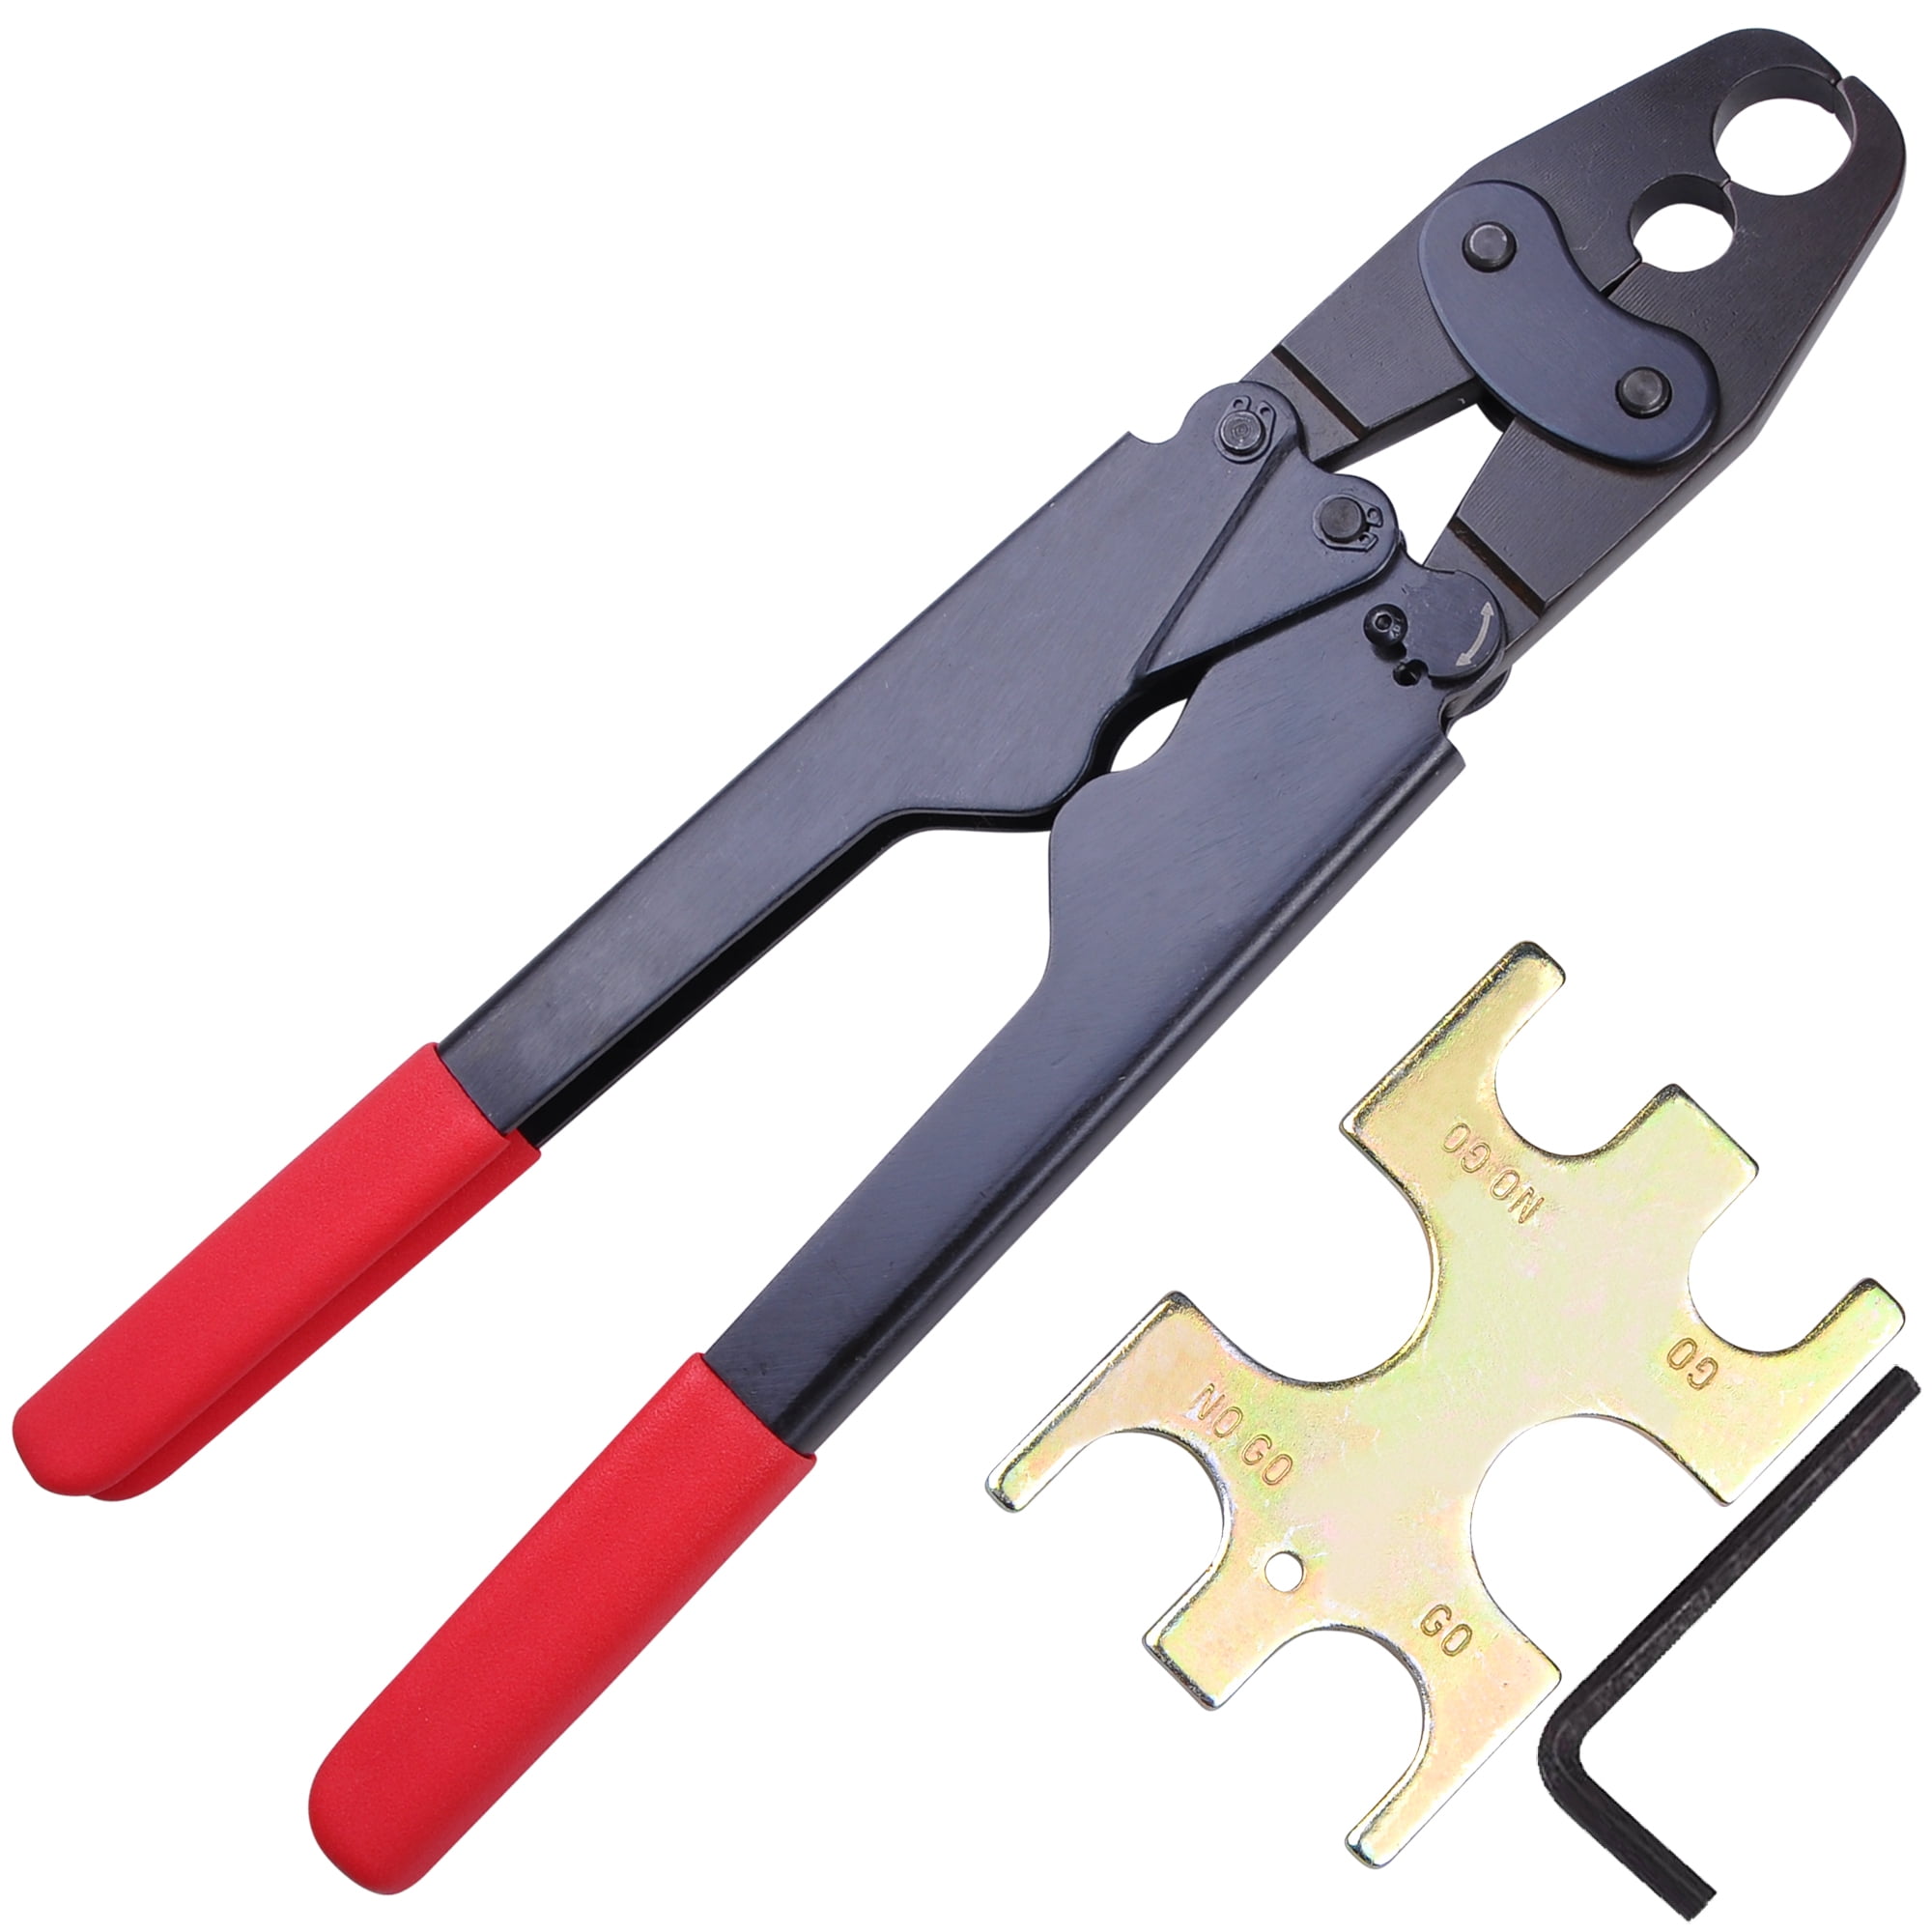 Universal Jaws for Pex Pipe Crimping Tools Pipe Clamping Tools Plumbing 